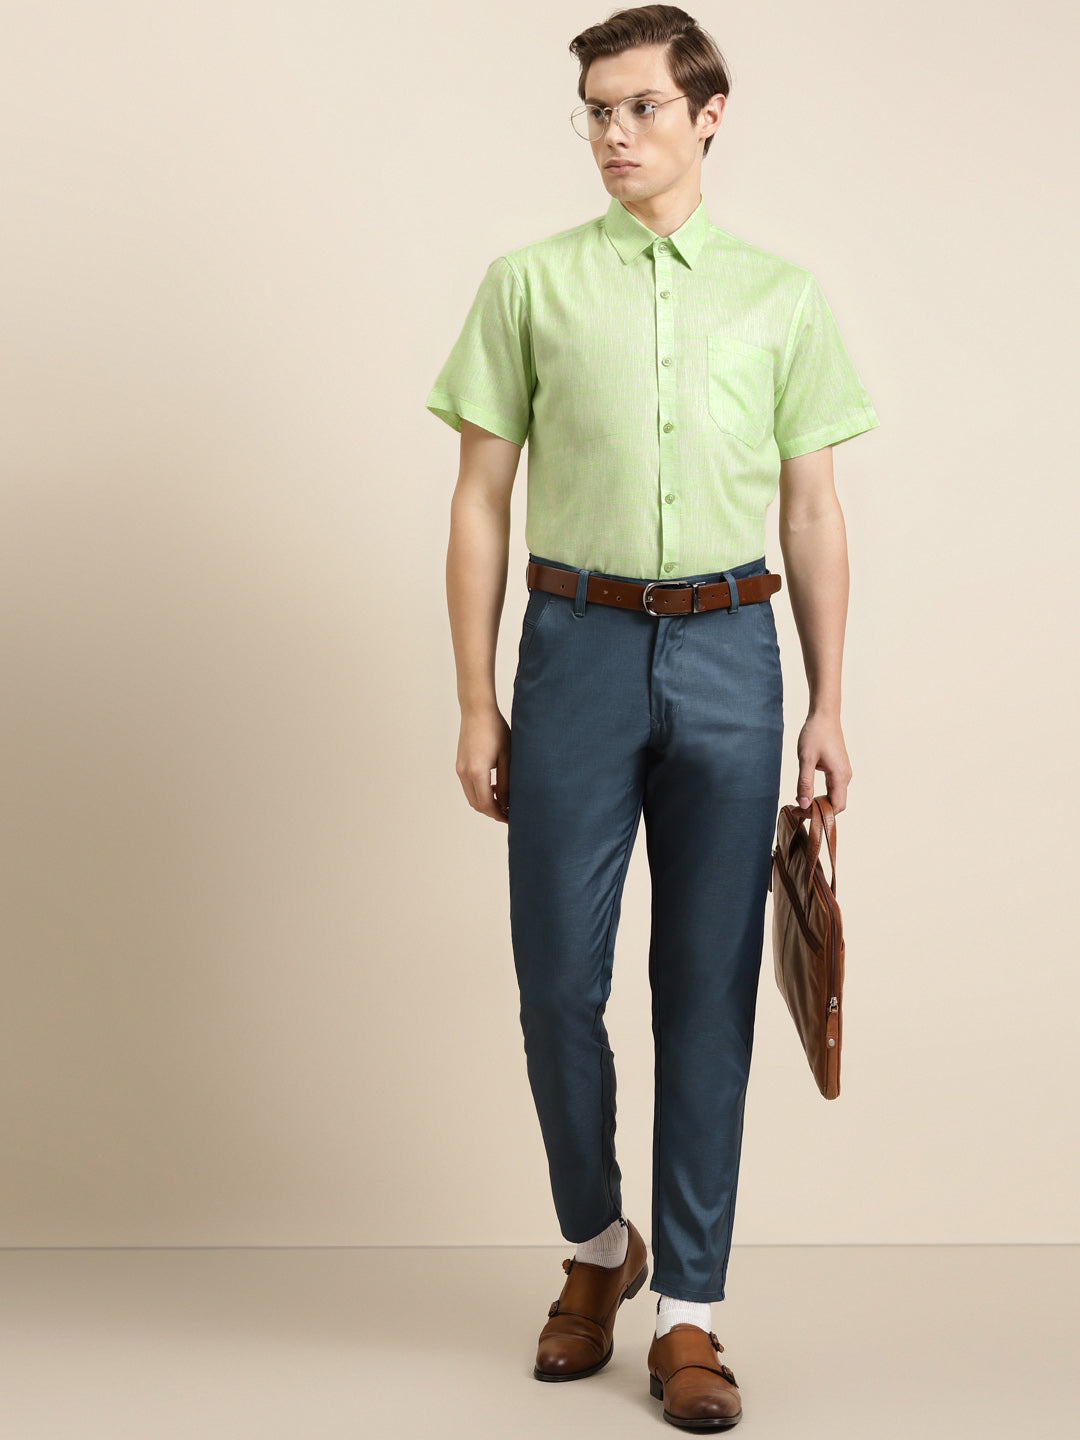 Men's Cotton Blend Lime Green Classic Formal Shirt - Sojanya